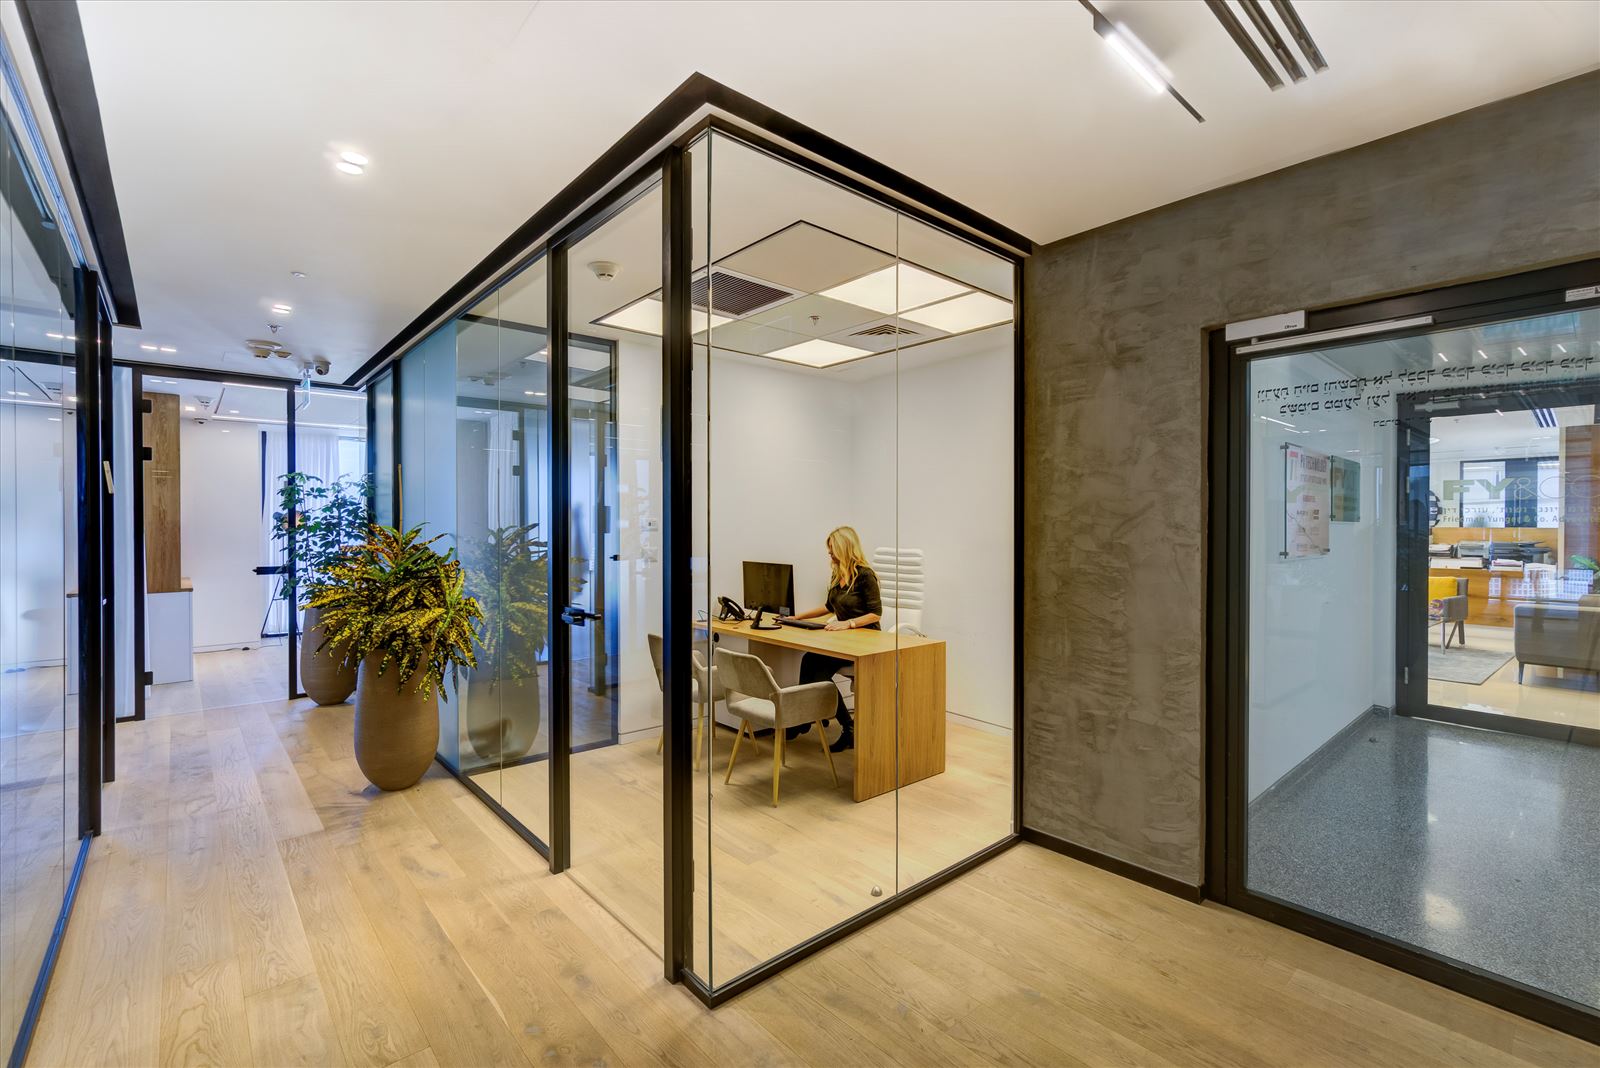 Pie Technology Office - תאורה בחדרי המשרד על ידי דורי קמחי תאורה אדריכלית